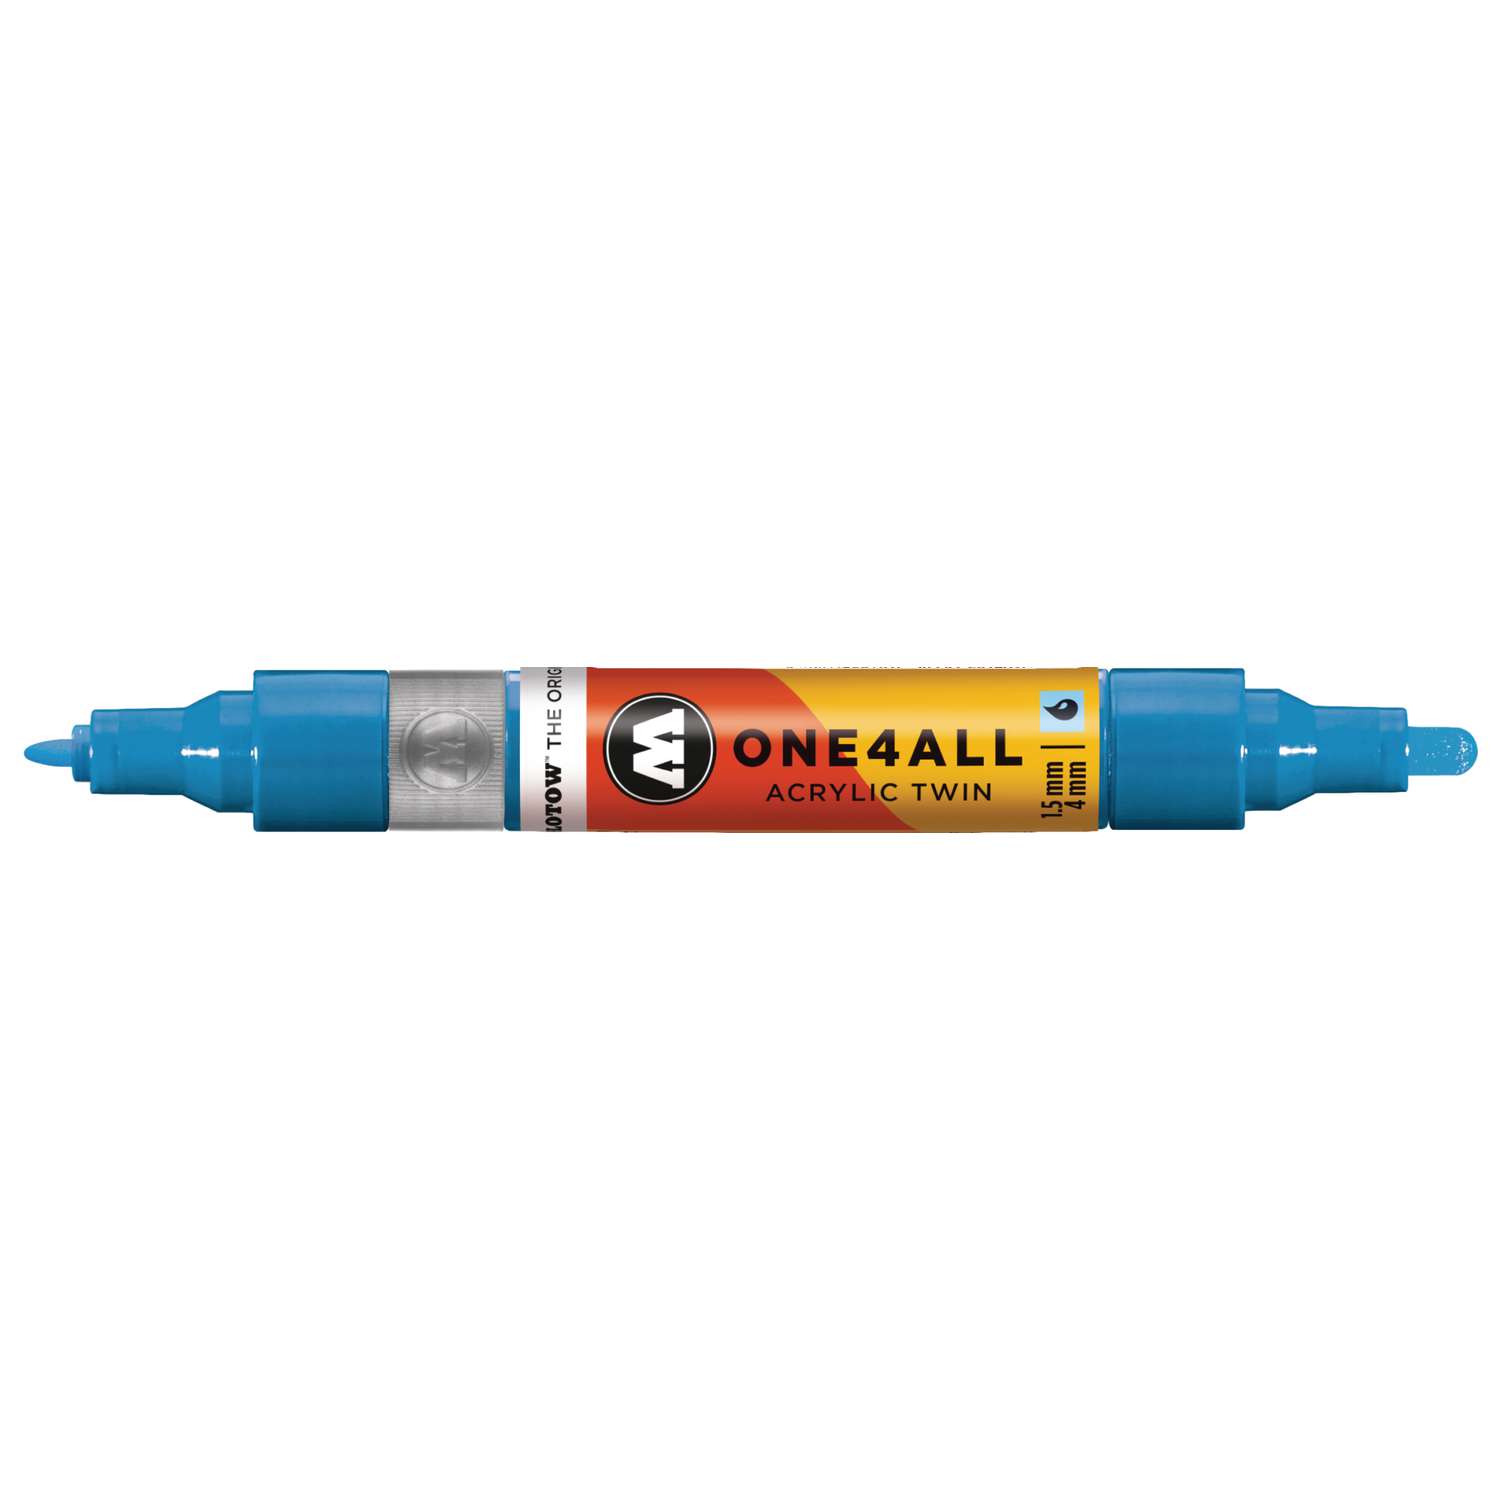 One4all Twin Marker, 50,000+ Art Supplies